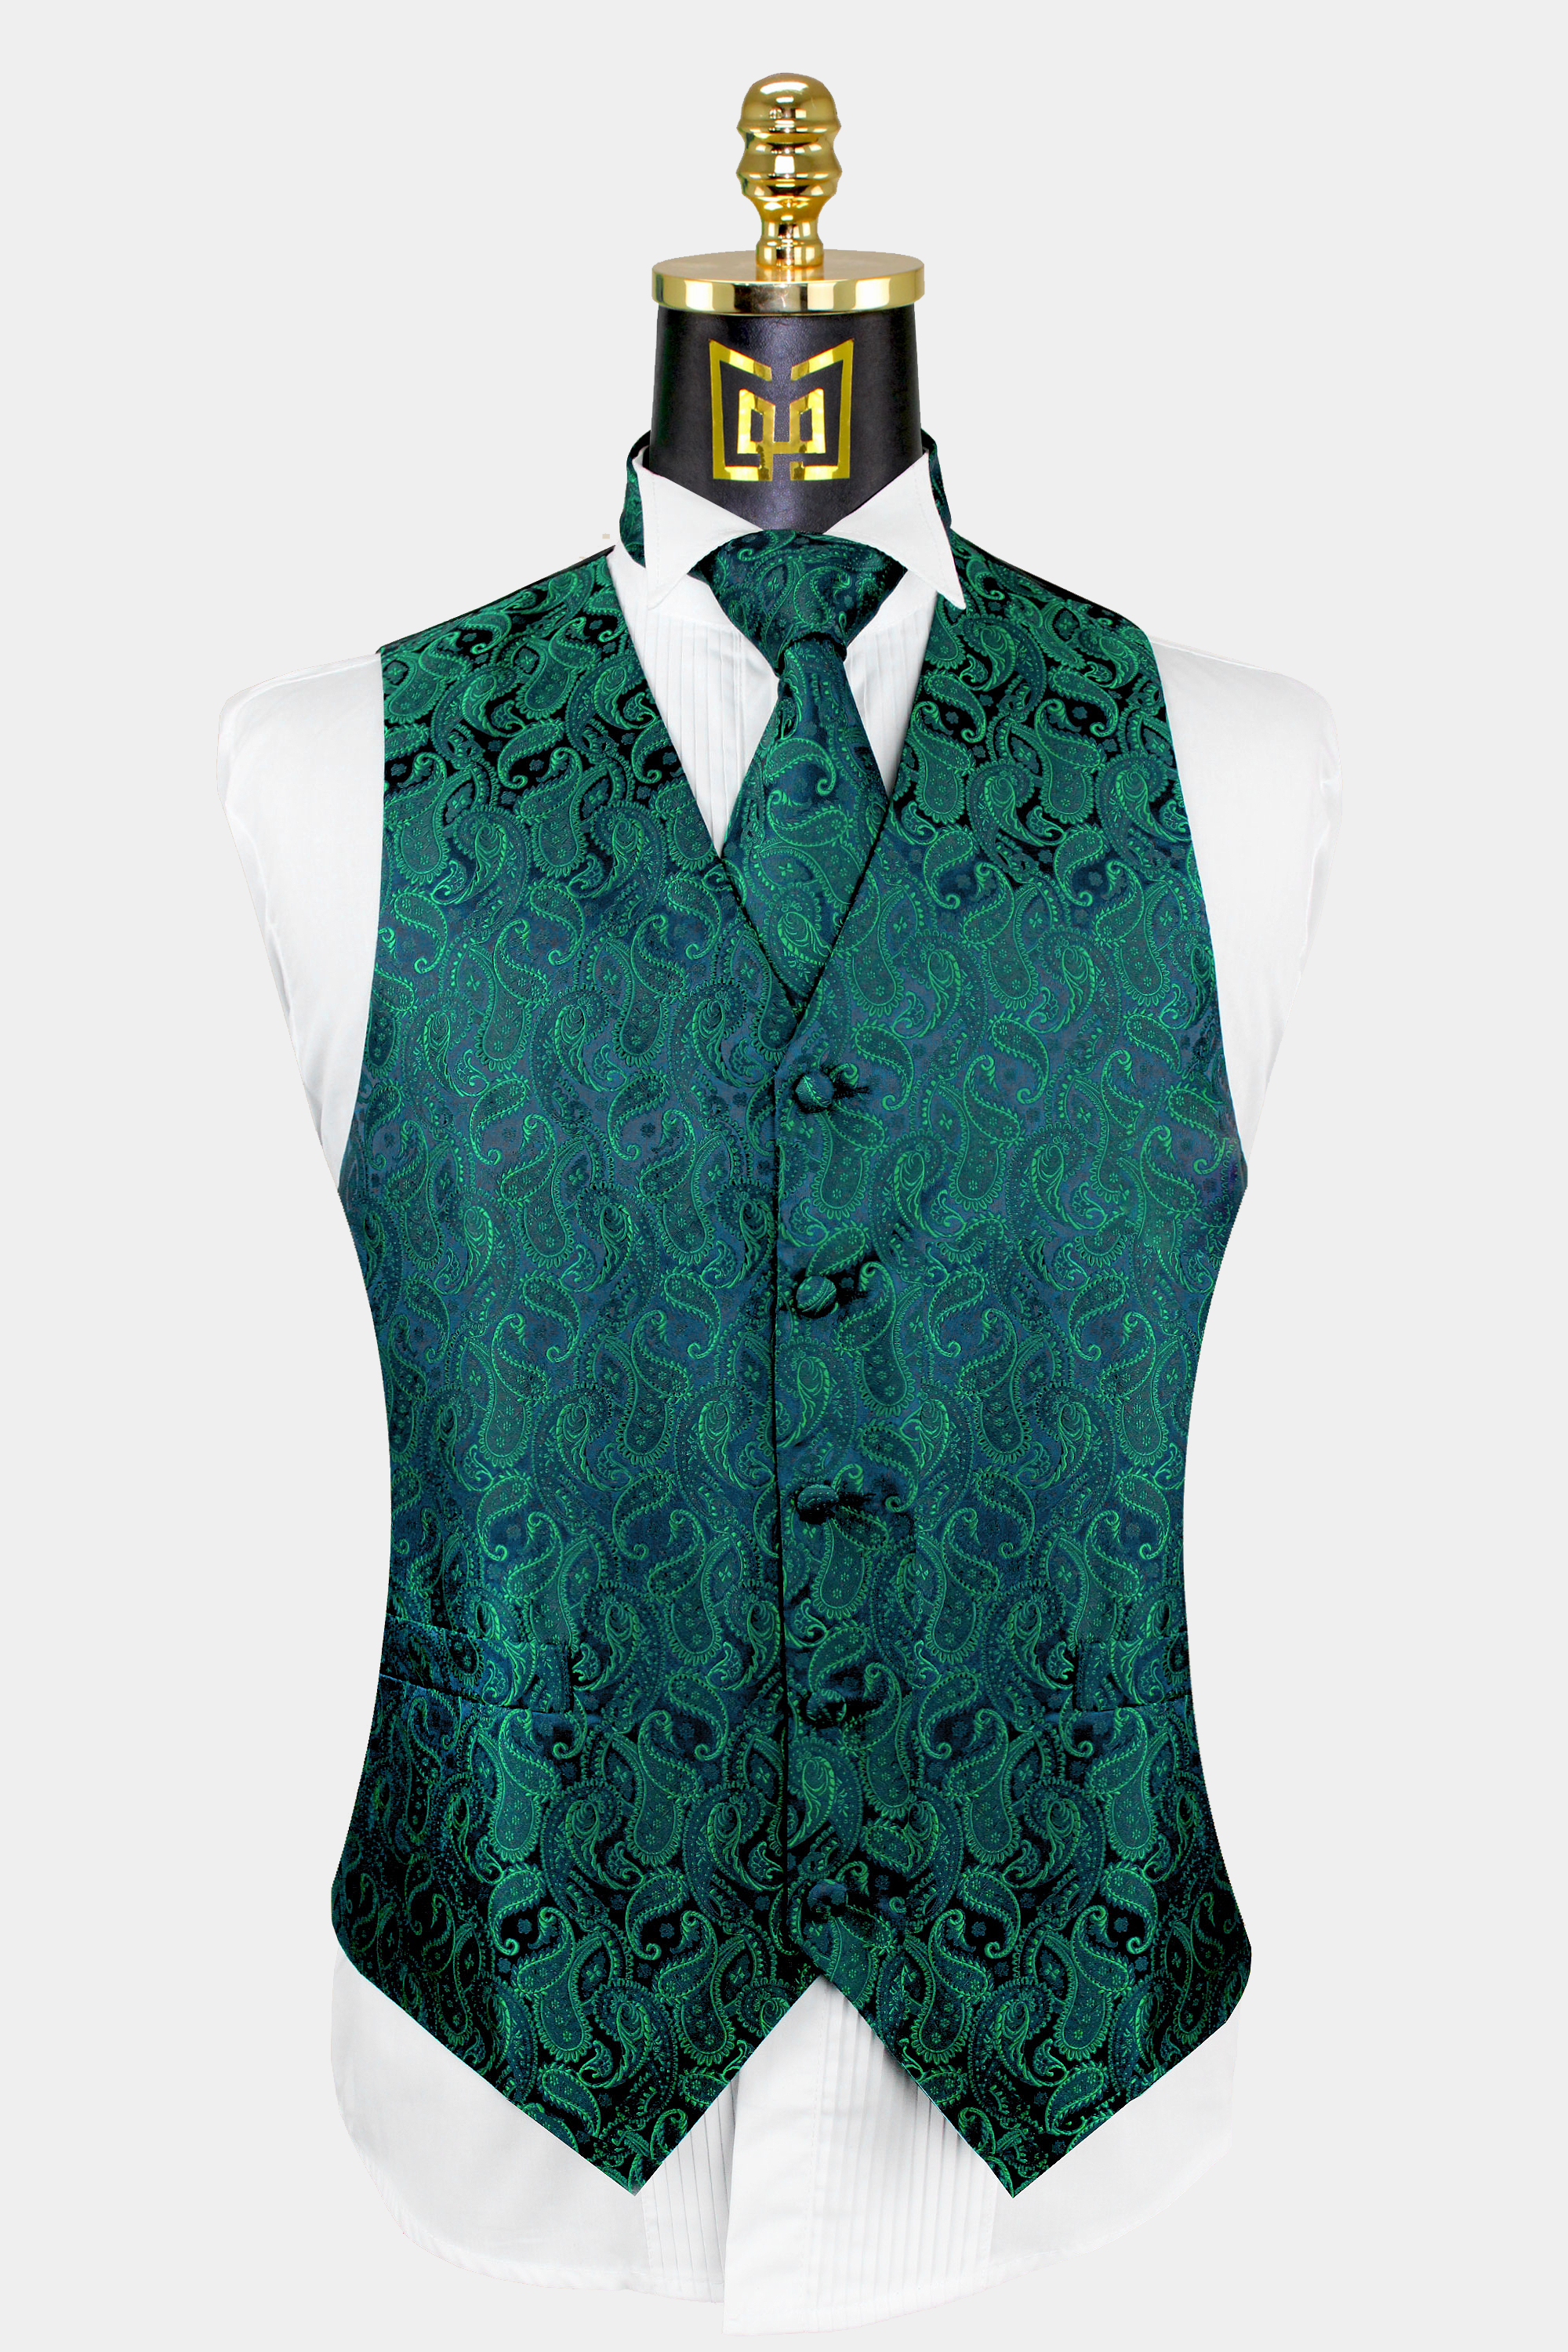 Emerald Green Paisley Vest & Tie Set - 3 Piece